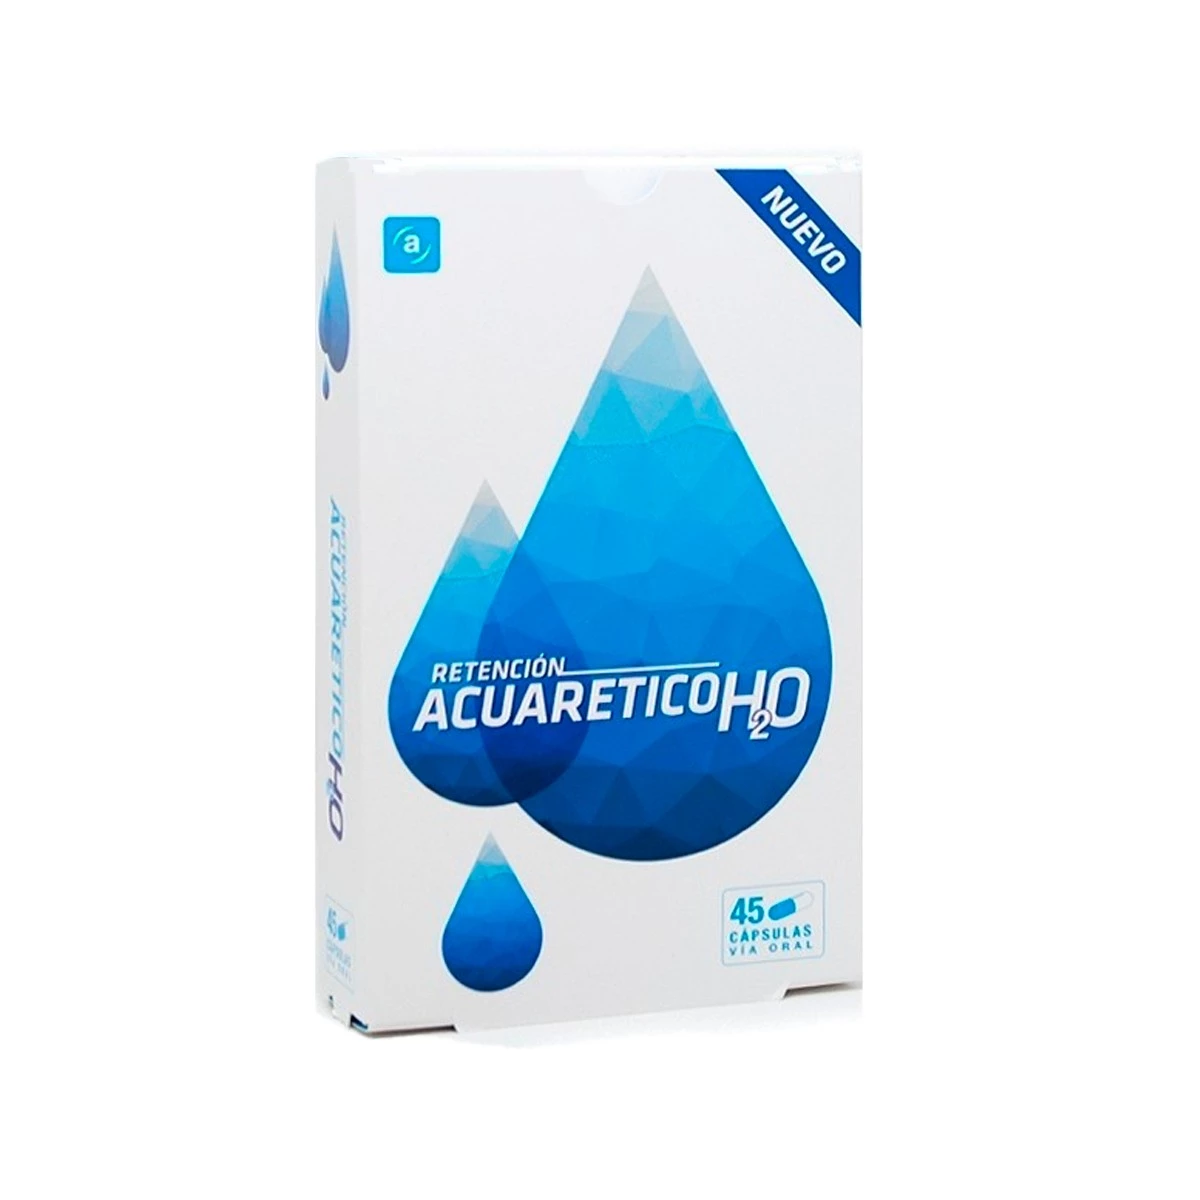 Acuaretico H2O, 45 Capsulas.